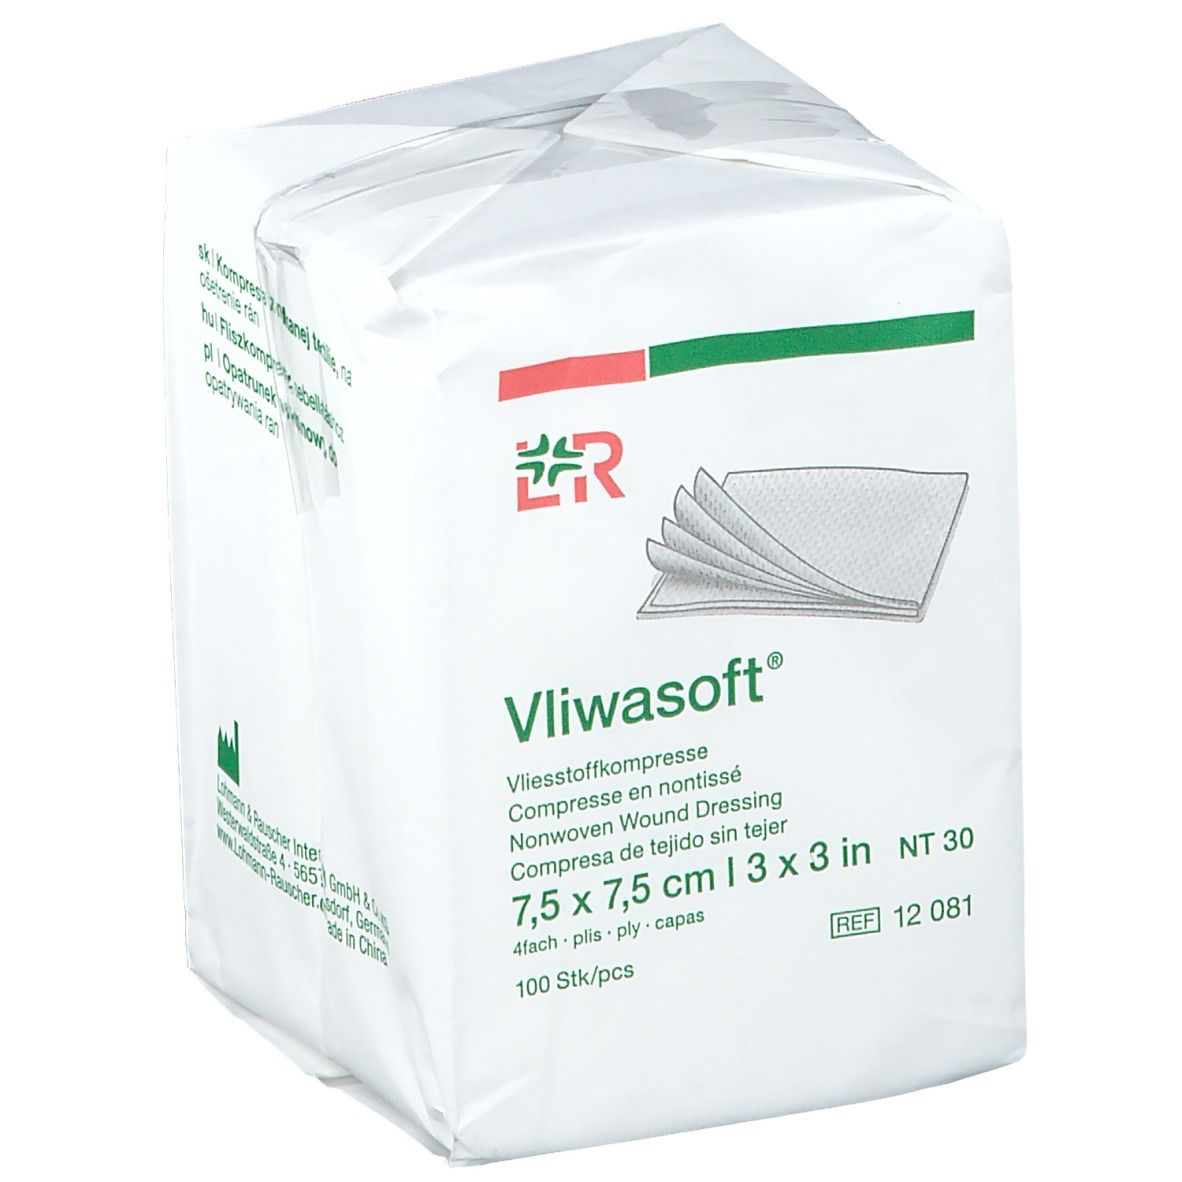 Vliwasoft® Compresse in TNT 7.5 x 7.5 cm